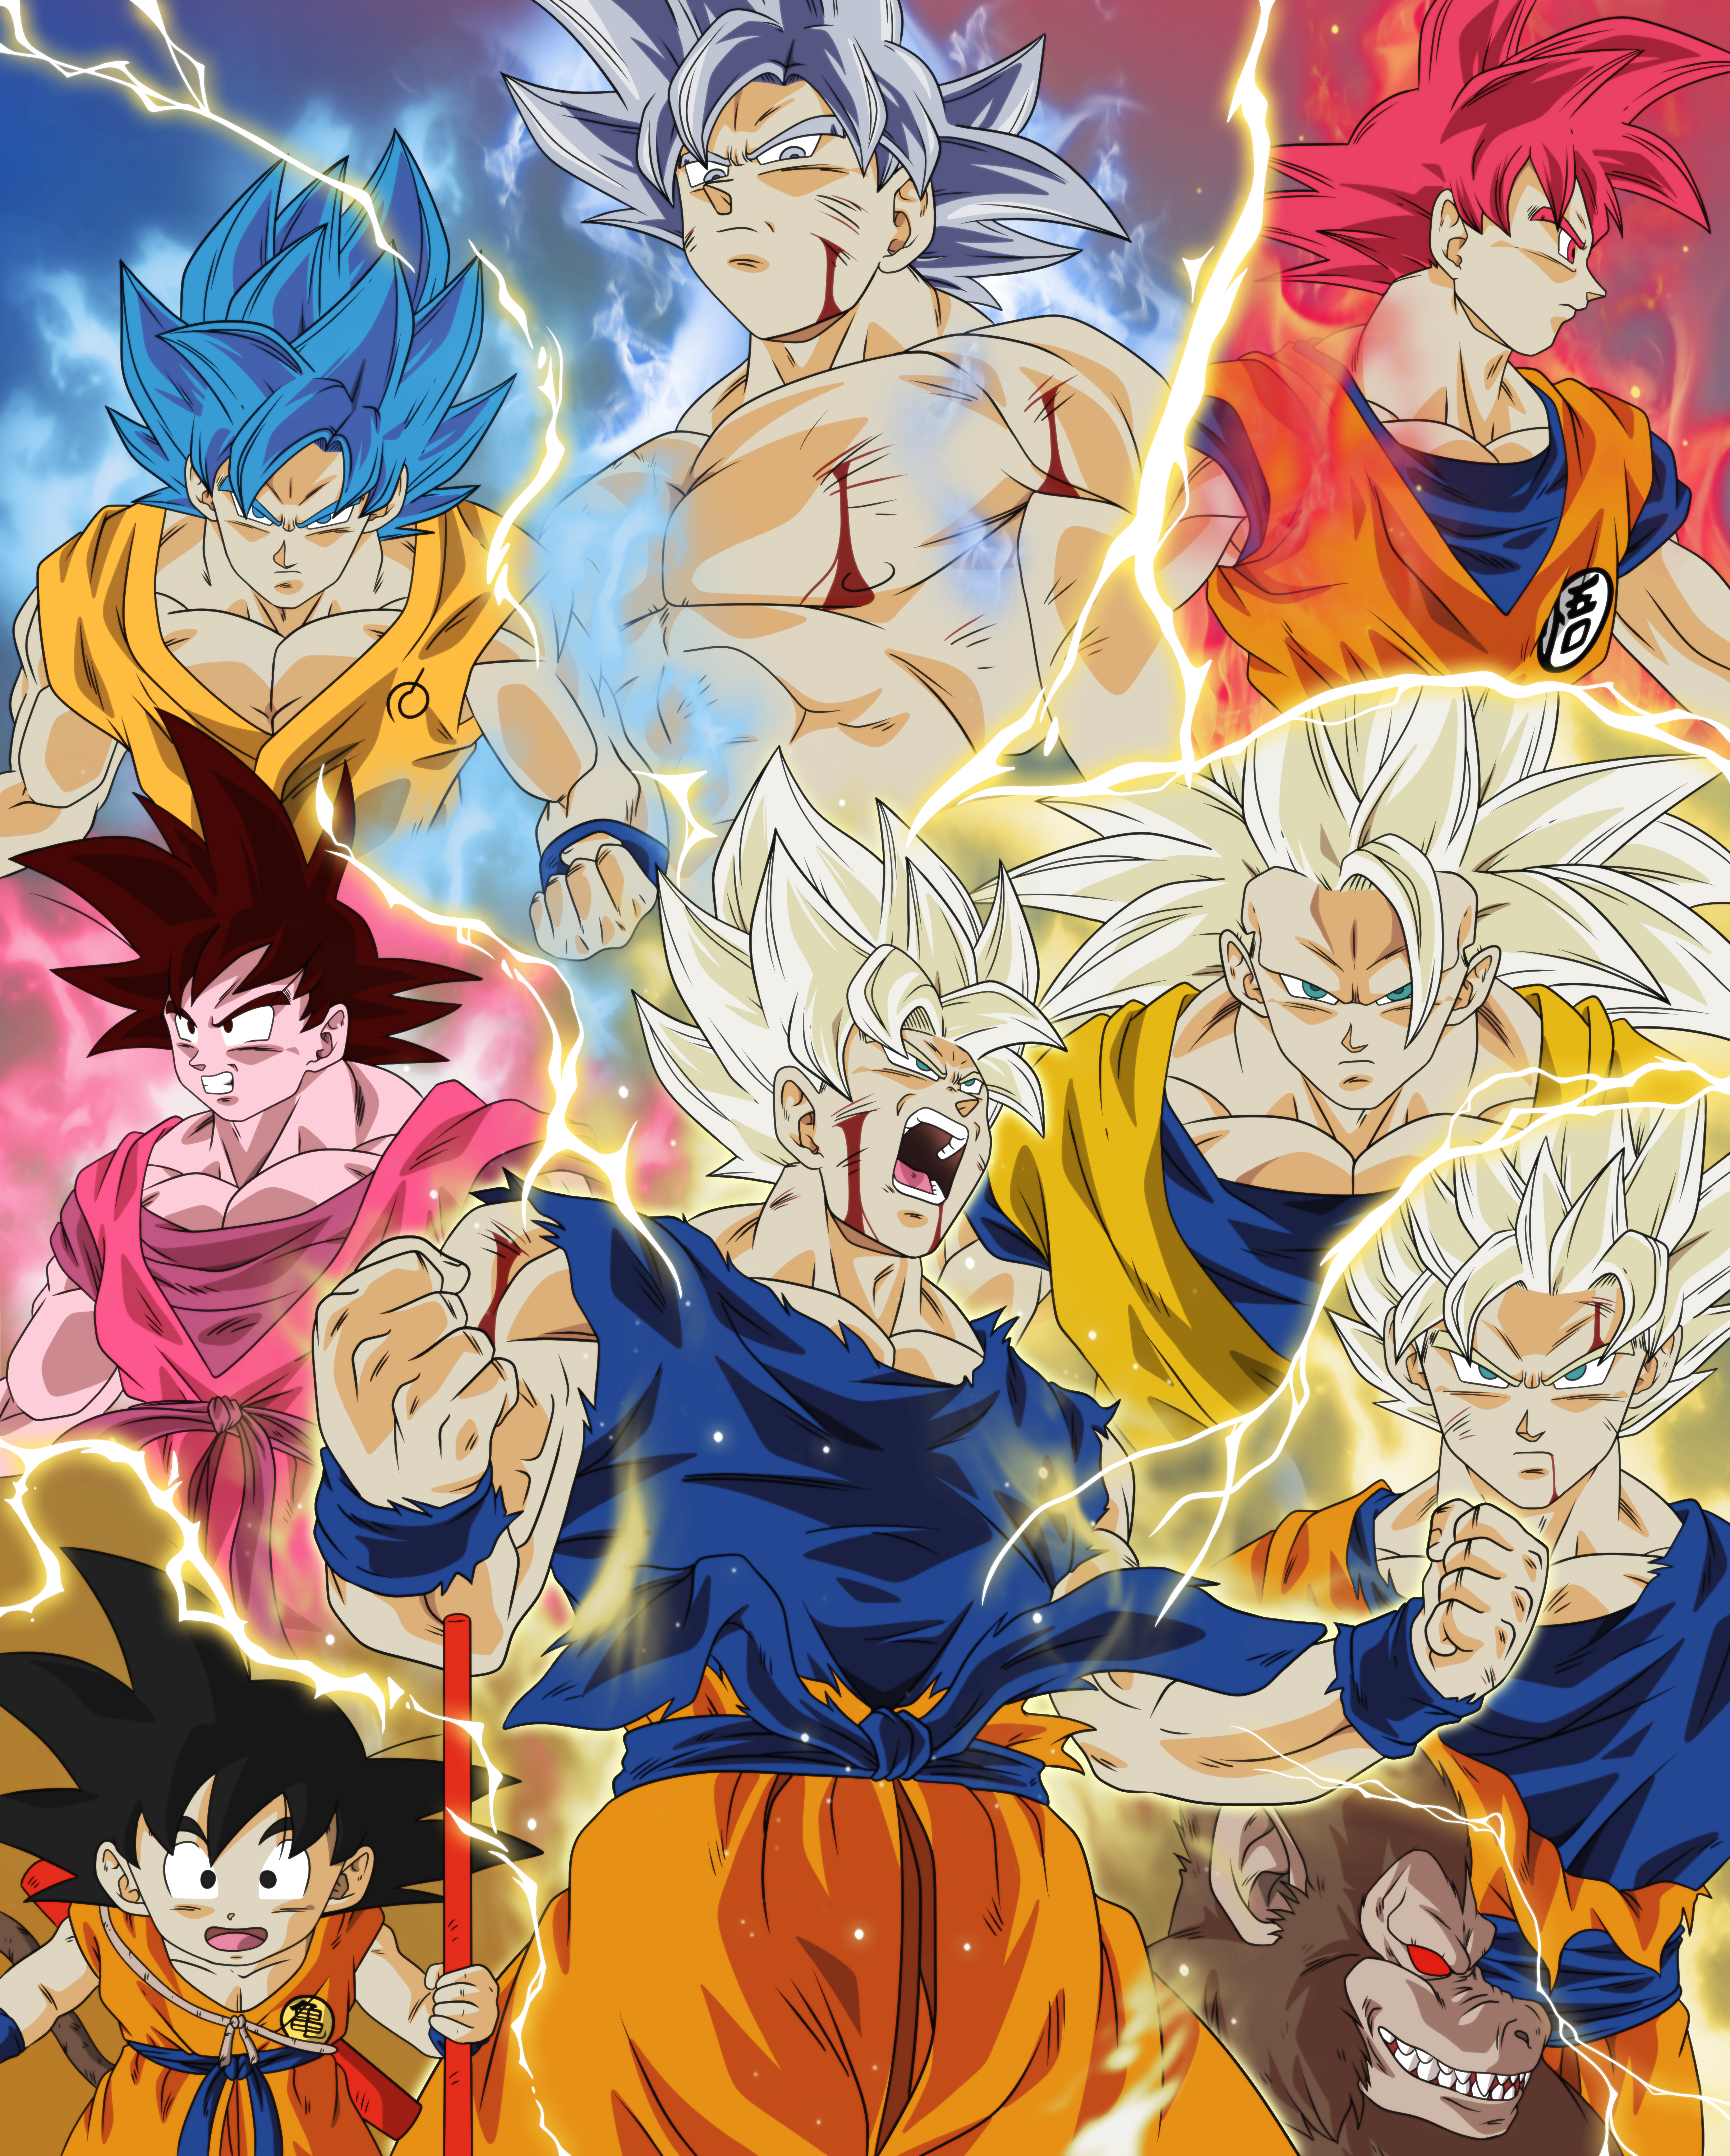 Goku transformaciones by BardockSonic on DeviantArt